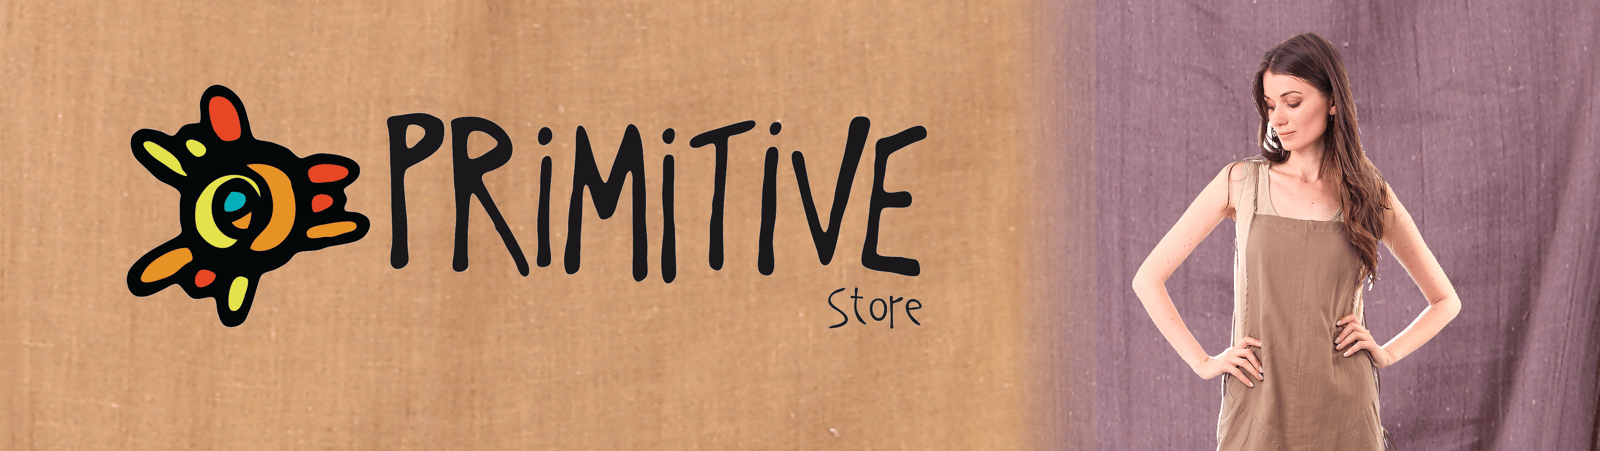 Primitive Store